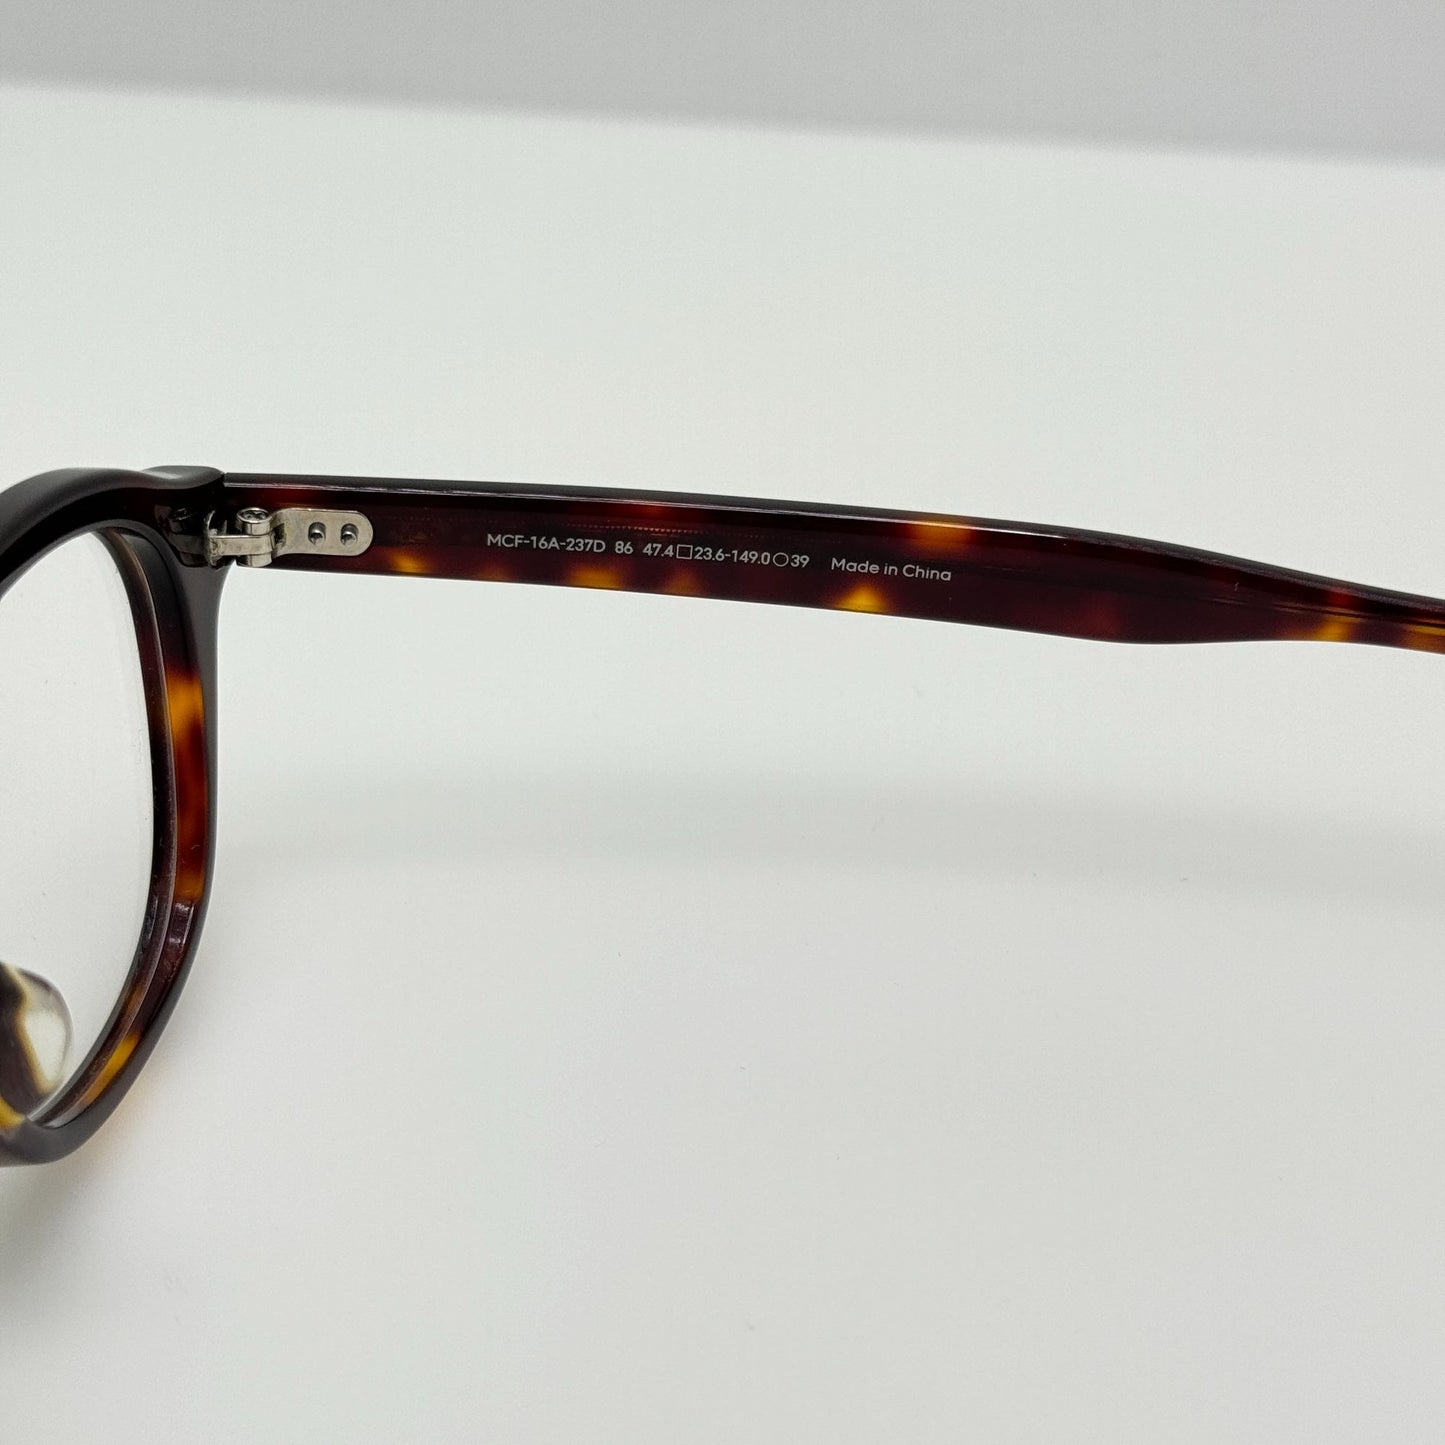 Jins Eyeglasses Eye Glasses Frames MCF-16A-237D 86 47.4-23.6-149 39